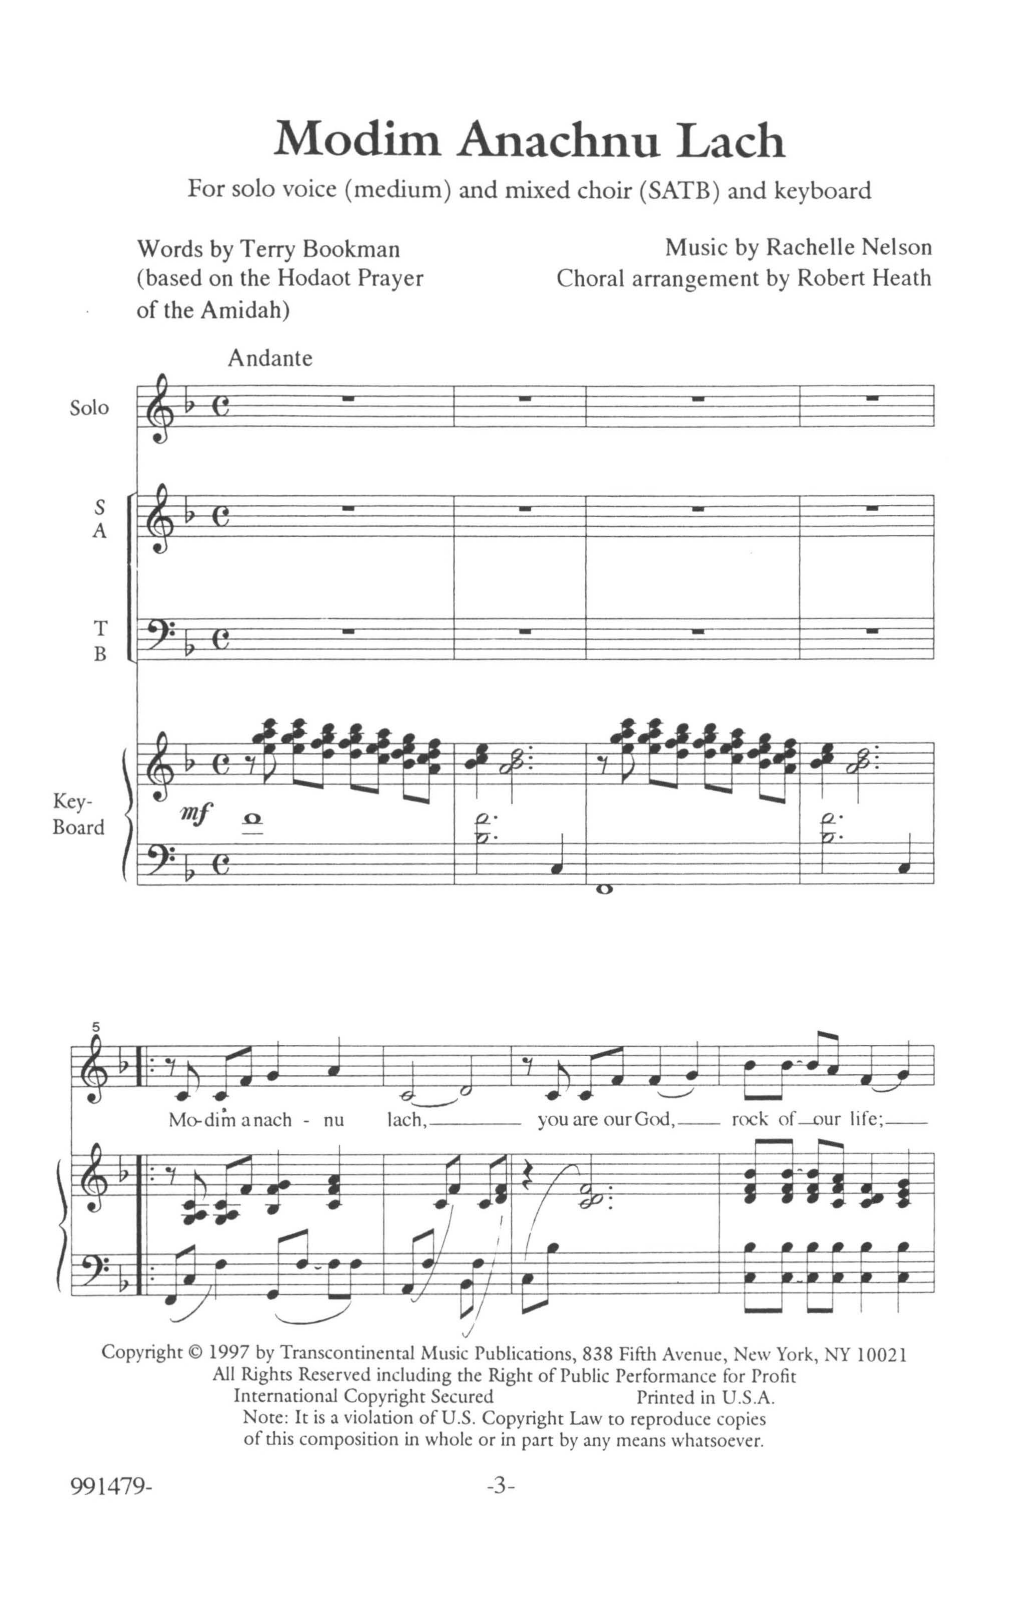 Download Rachelle Nelson Modim Anachnu Lach Solo Sheet Music and learn how to play SATB Choir PDF digital score in minutes